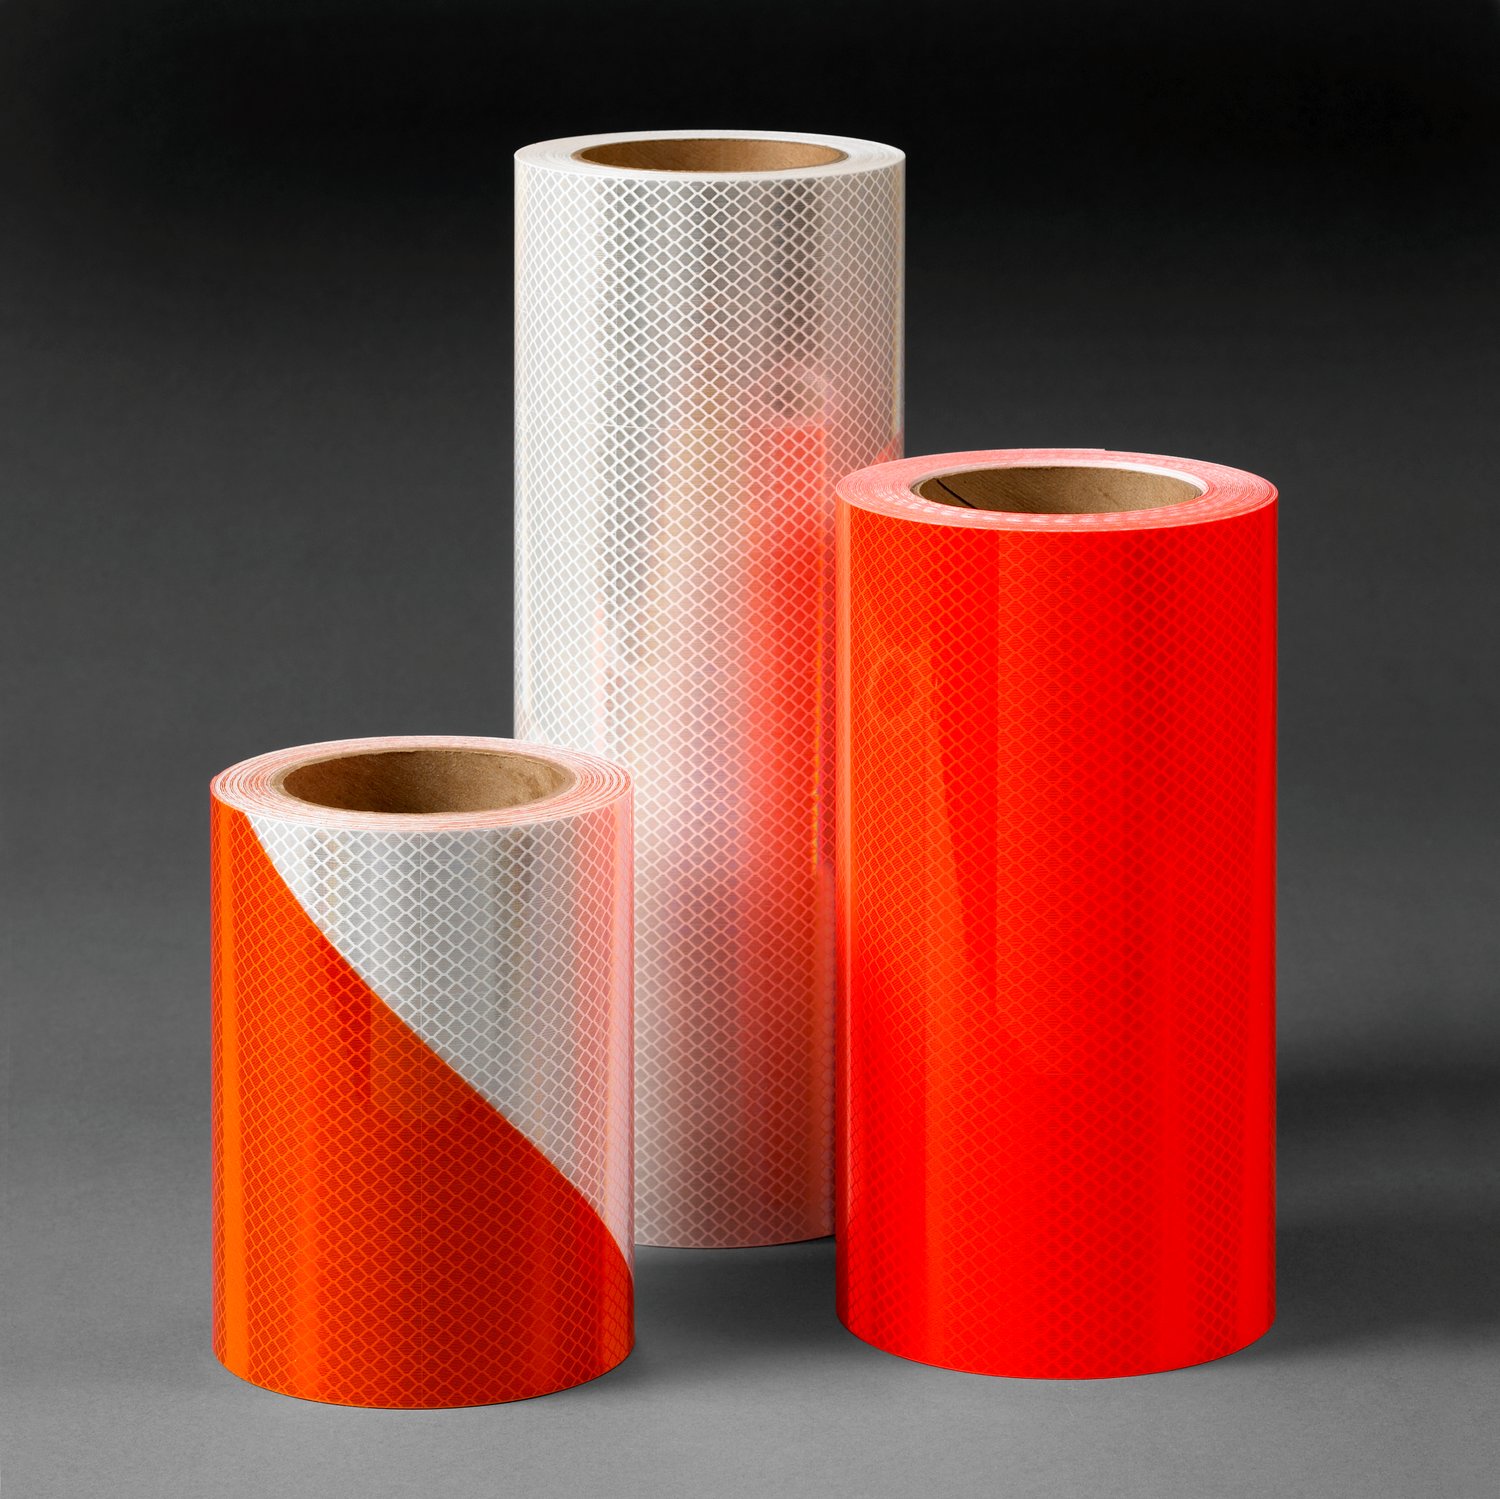 7010345020 - 3M Diamond Grade DG³ Pre-Striped Barricade Sheeting Series 444R,
Orange/White, 4 in Right, 12 in x 50 yd